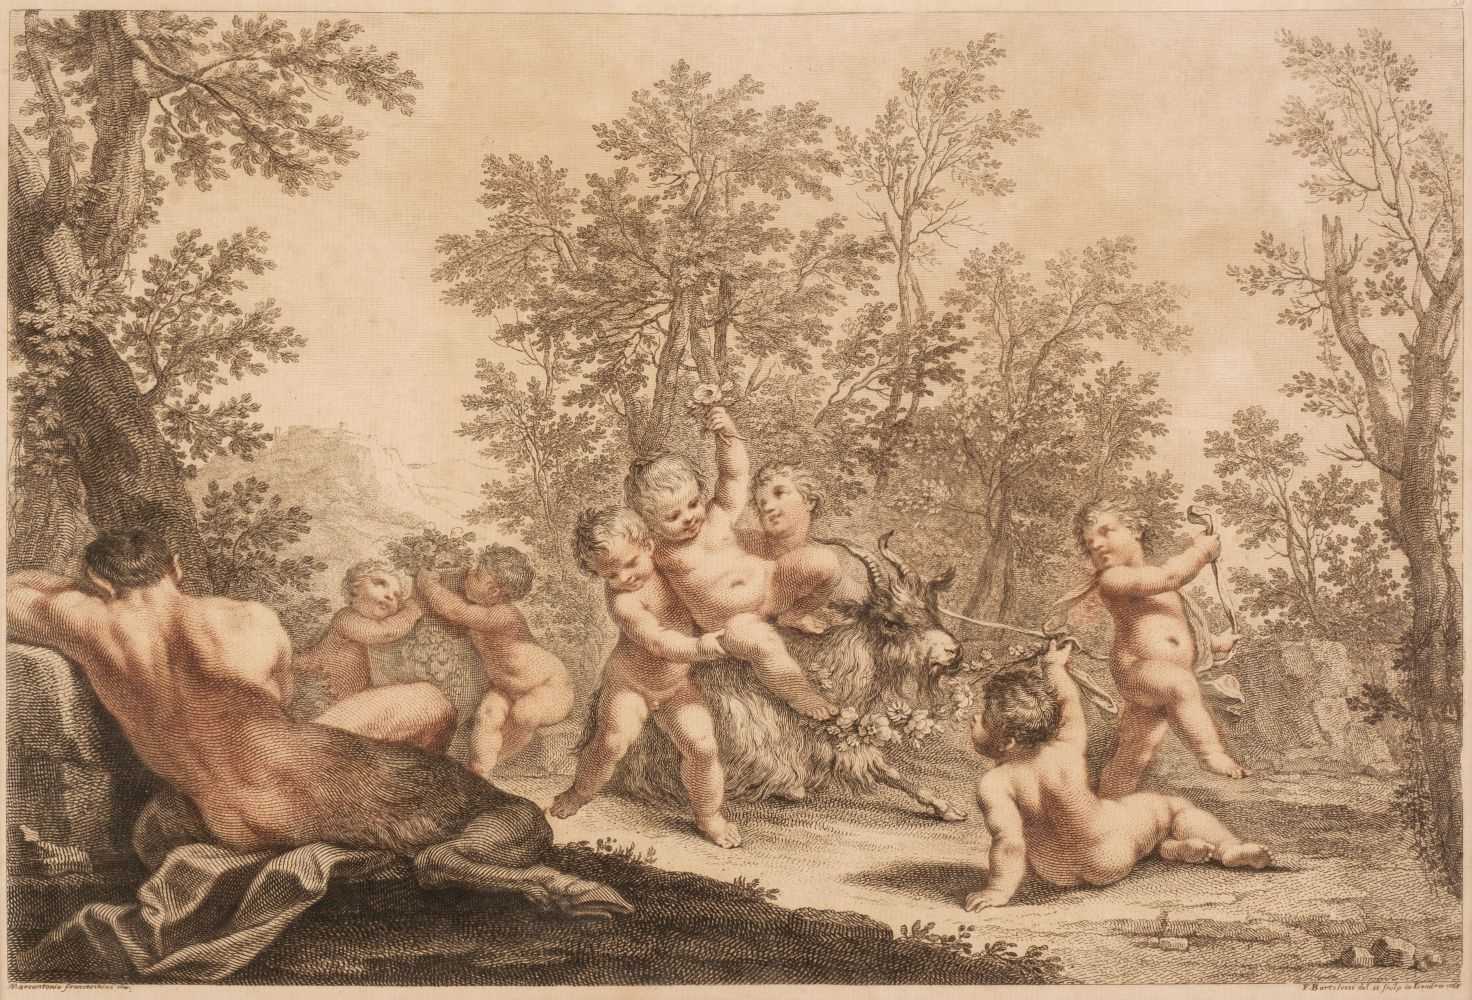 Lot 33 - Bartolozzi (Francesco, 1727-1815). Bacchanal of putti, after Franceschini